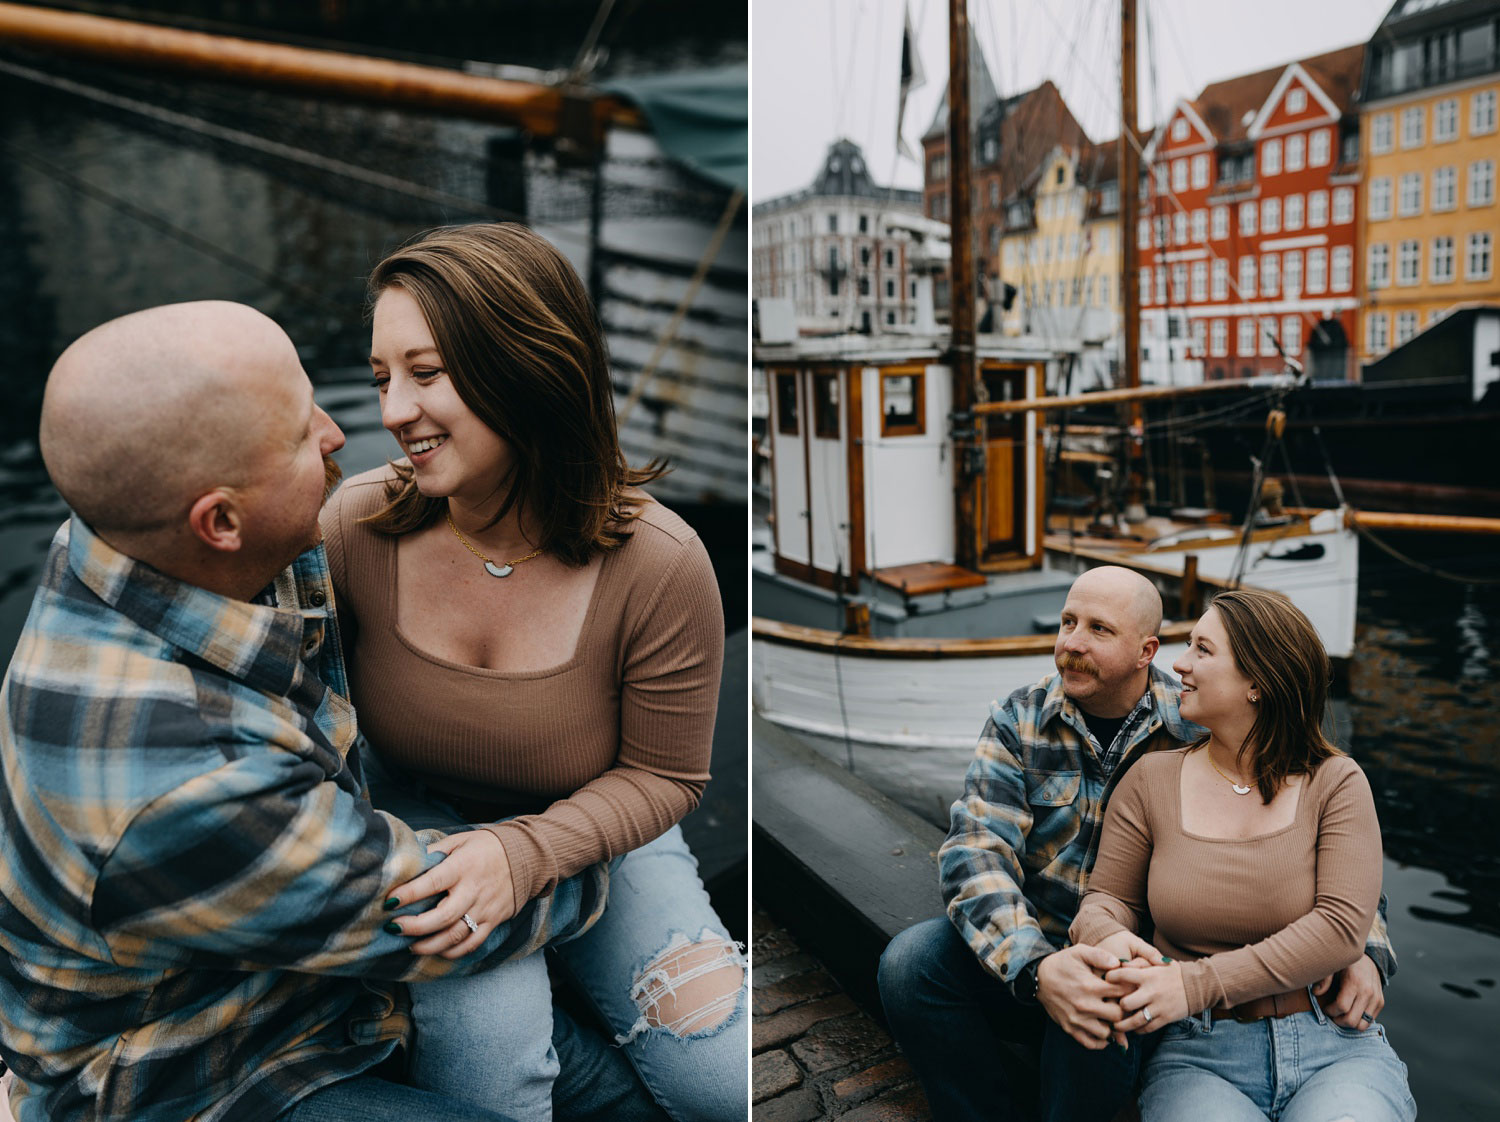 Honeymoon photo session by Copenhagen's canals.